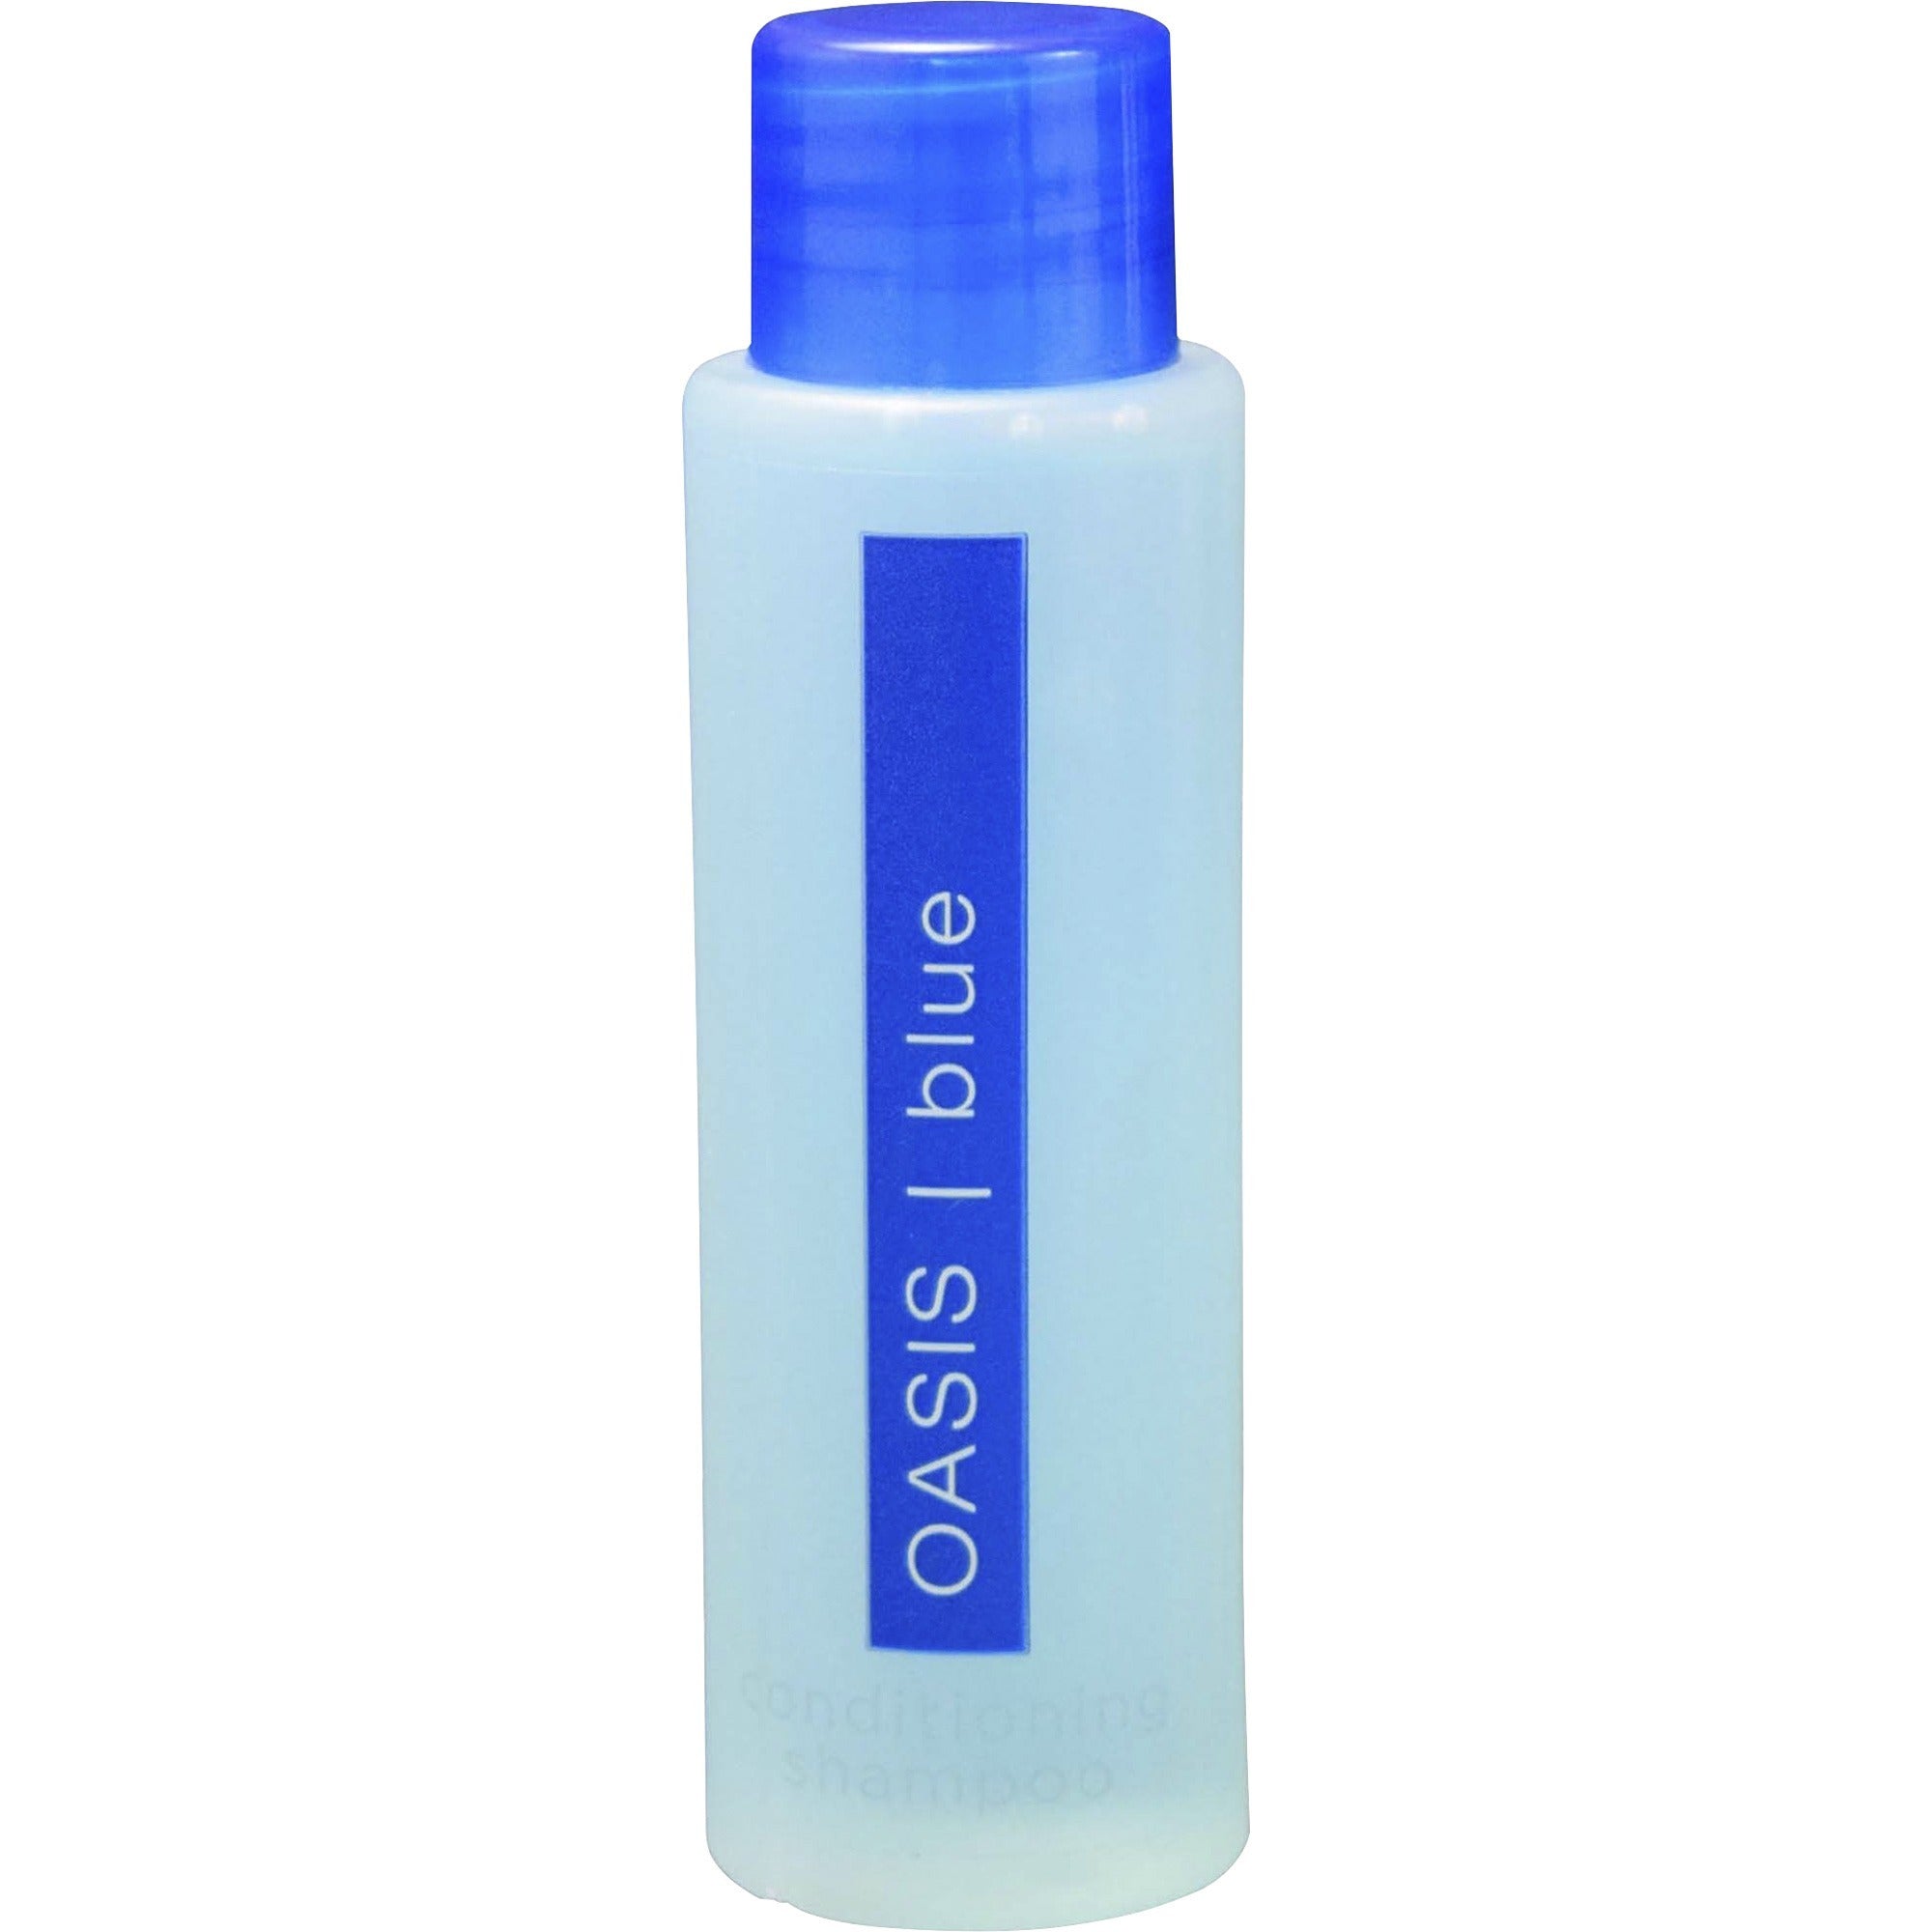 rdi-shampoo-1-fl-oz-30-ml-bottle-dispenser-hotel-white-288-carton_cfpshoasbtl1709 - 1